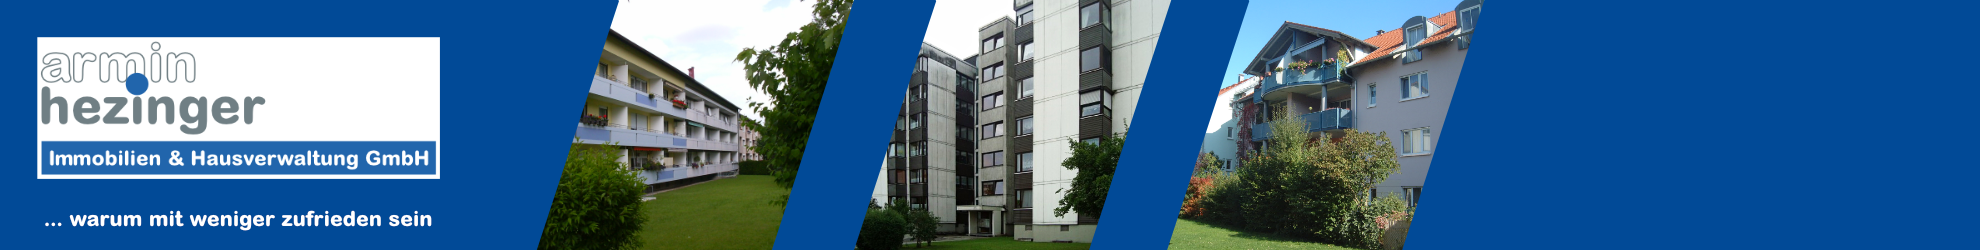 armin hezinger Immobilien & Hausverwaltung GmbH